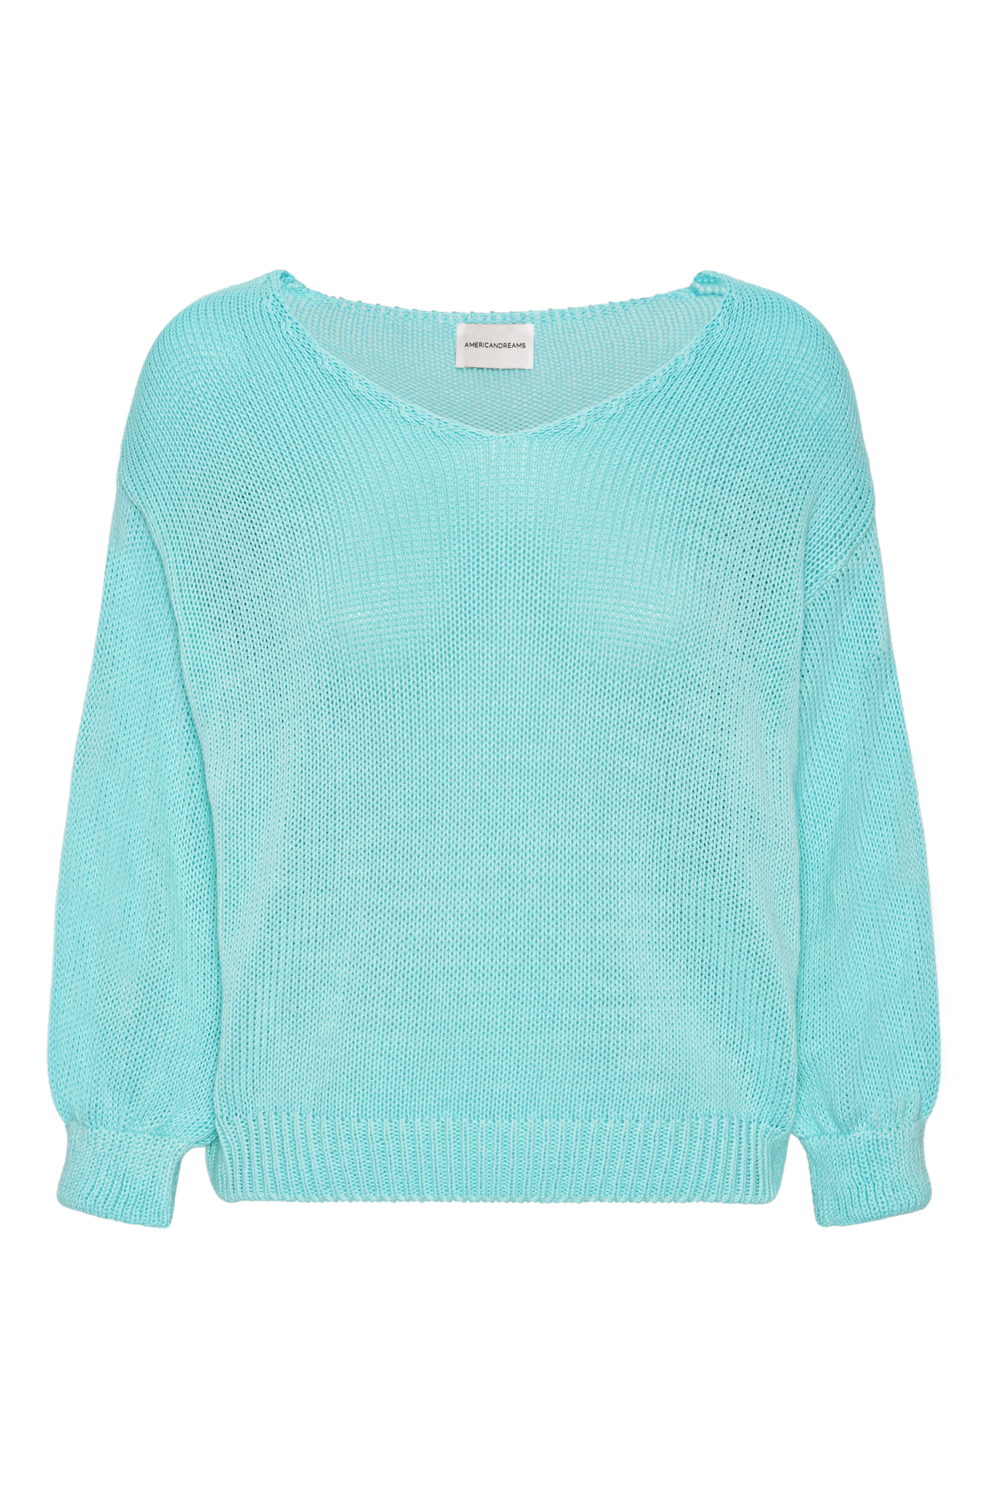 Milana LS Light Cotton Knit Turquoise